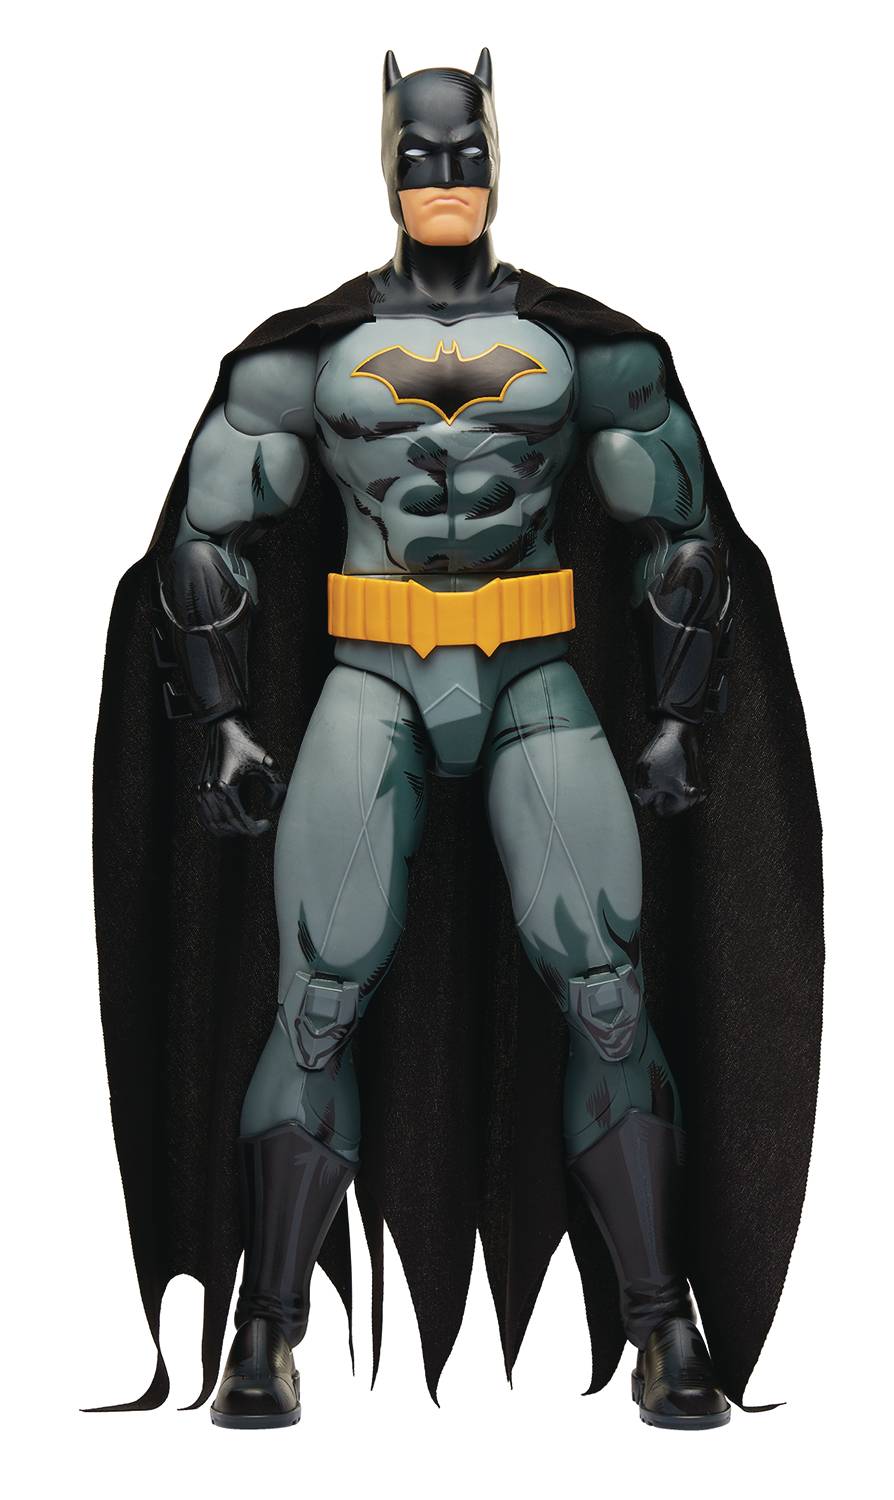 DC Big Figs Batman Rebirth 19 Inch Action Figure Case